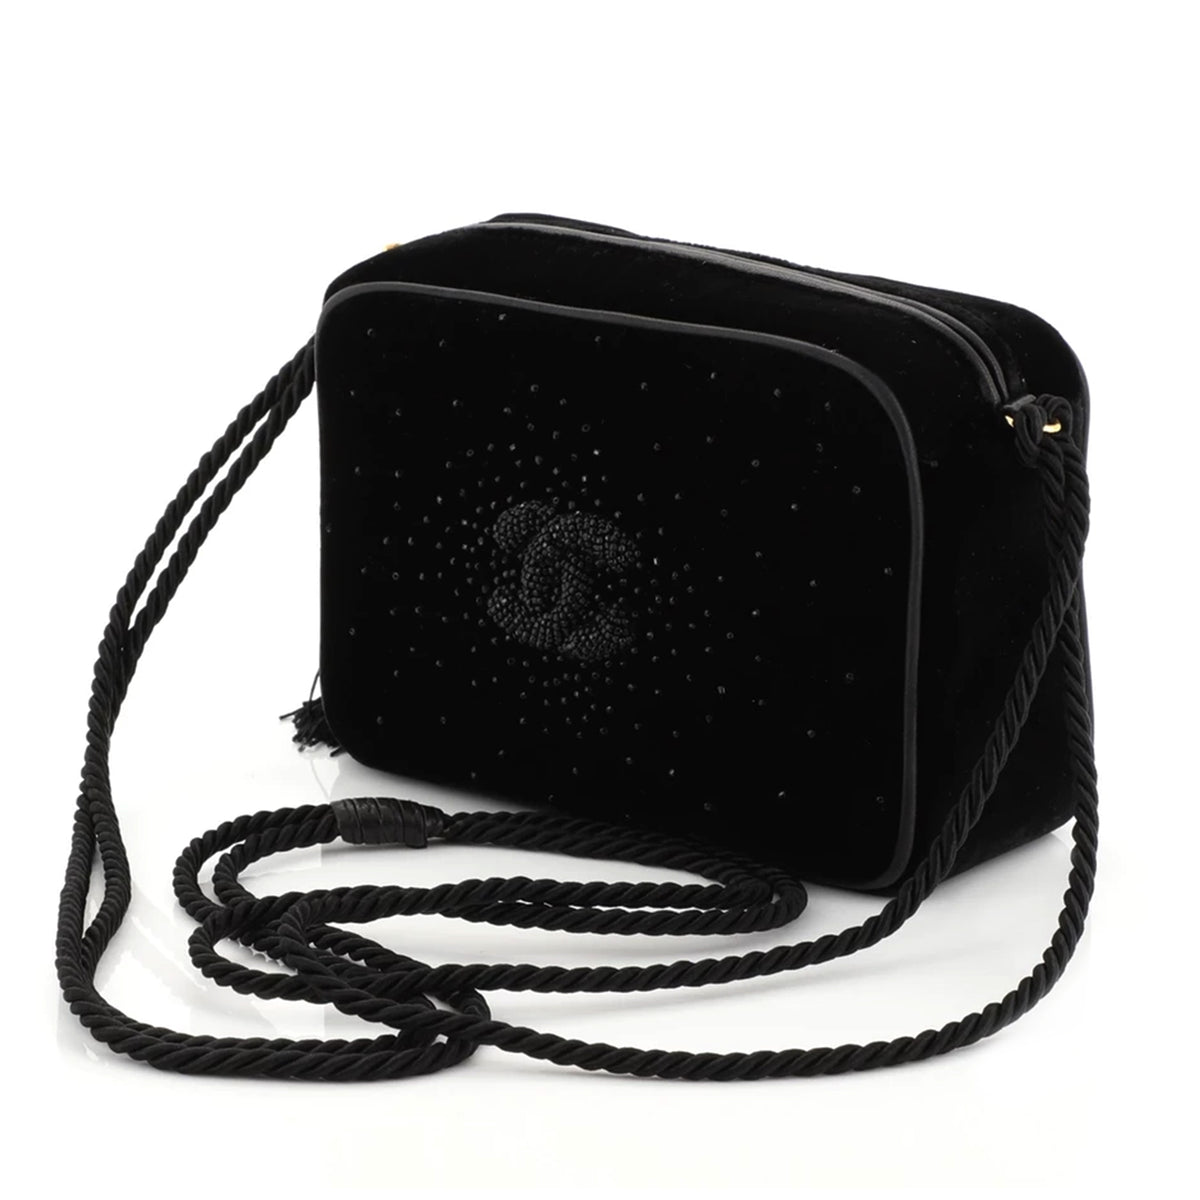 Shop Chanel Precision Vip Gift Bag